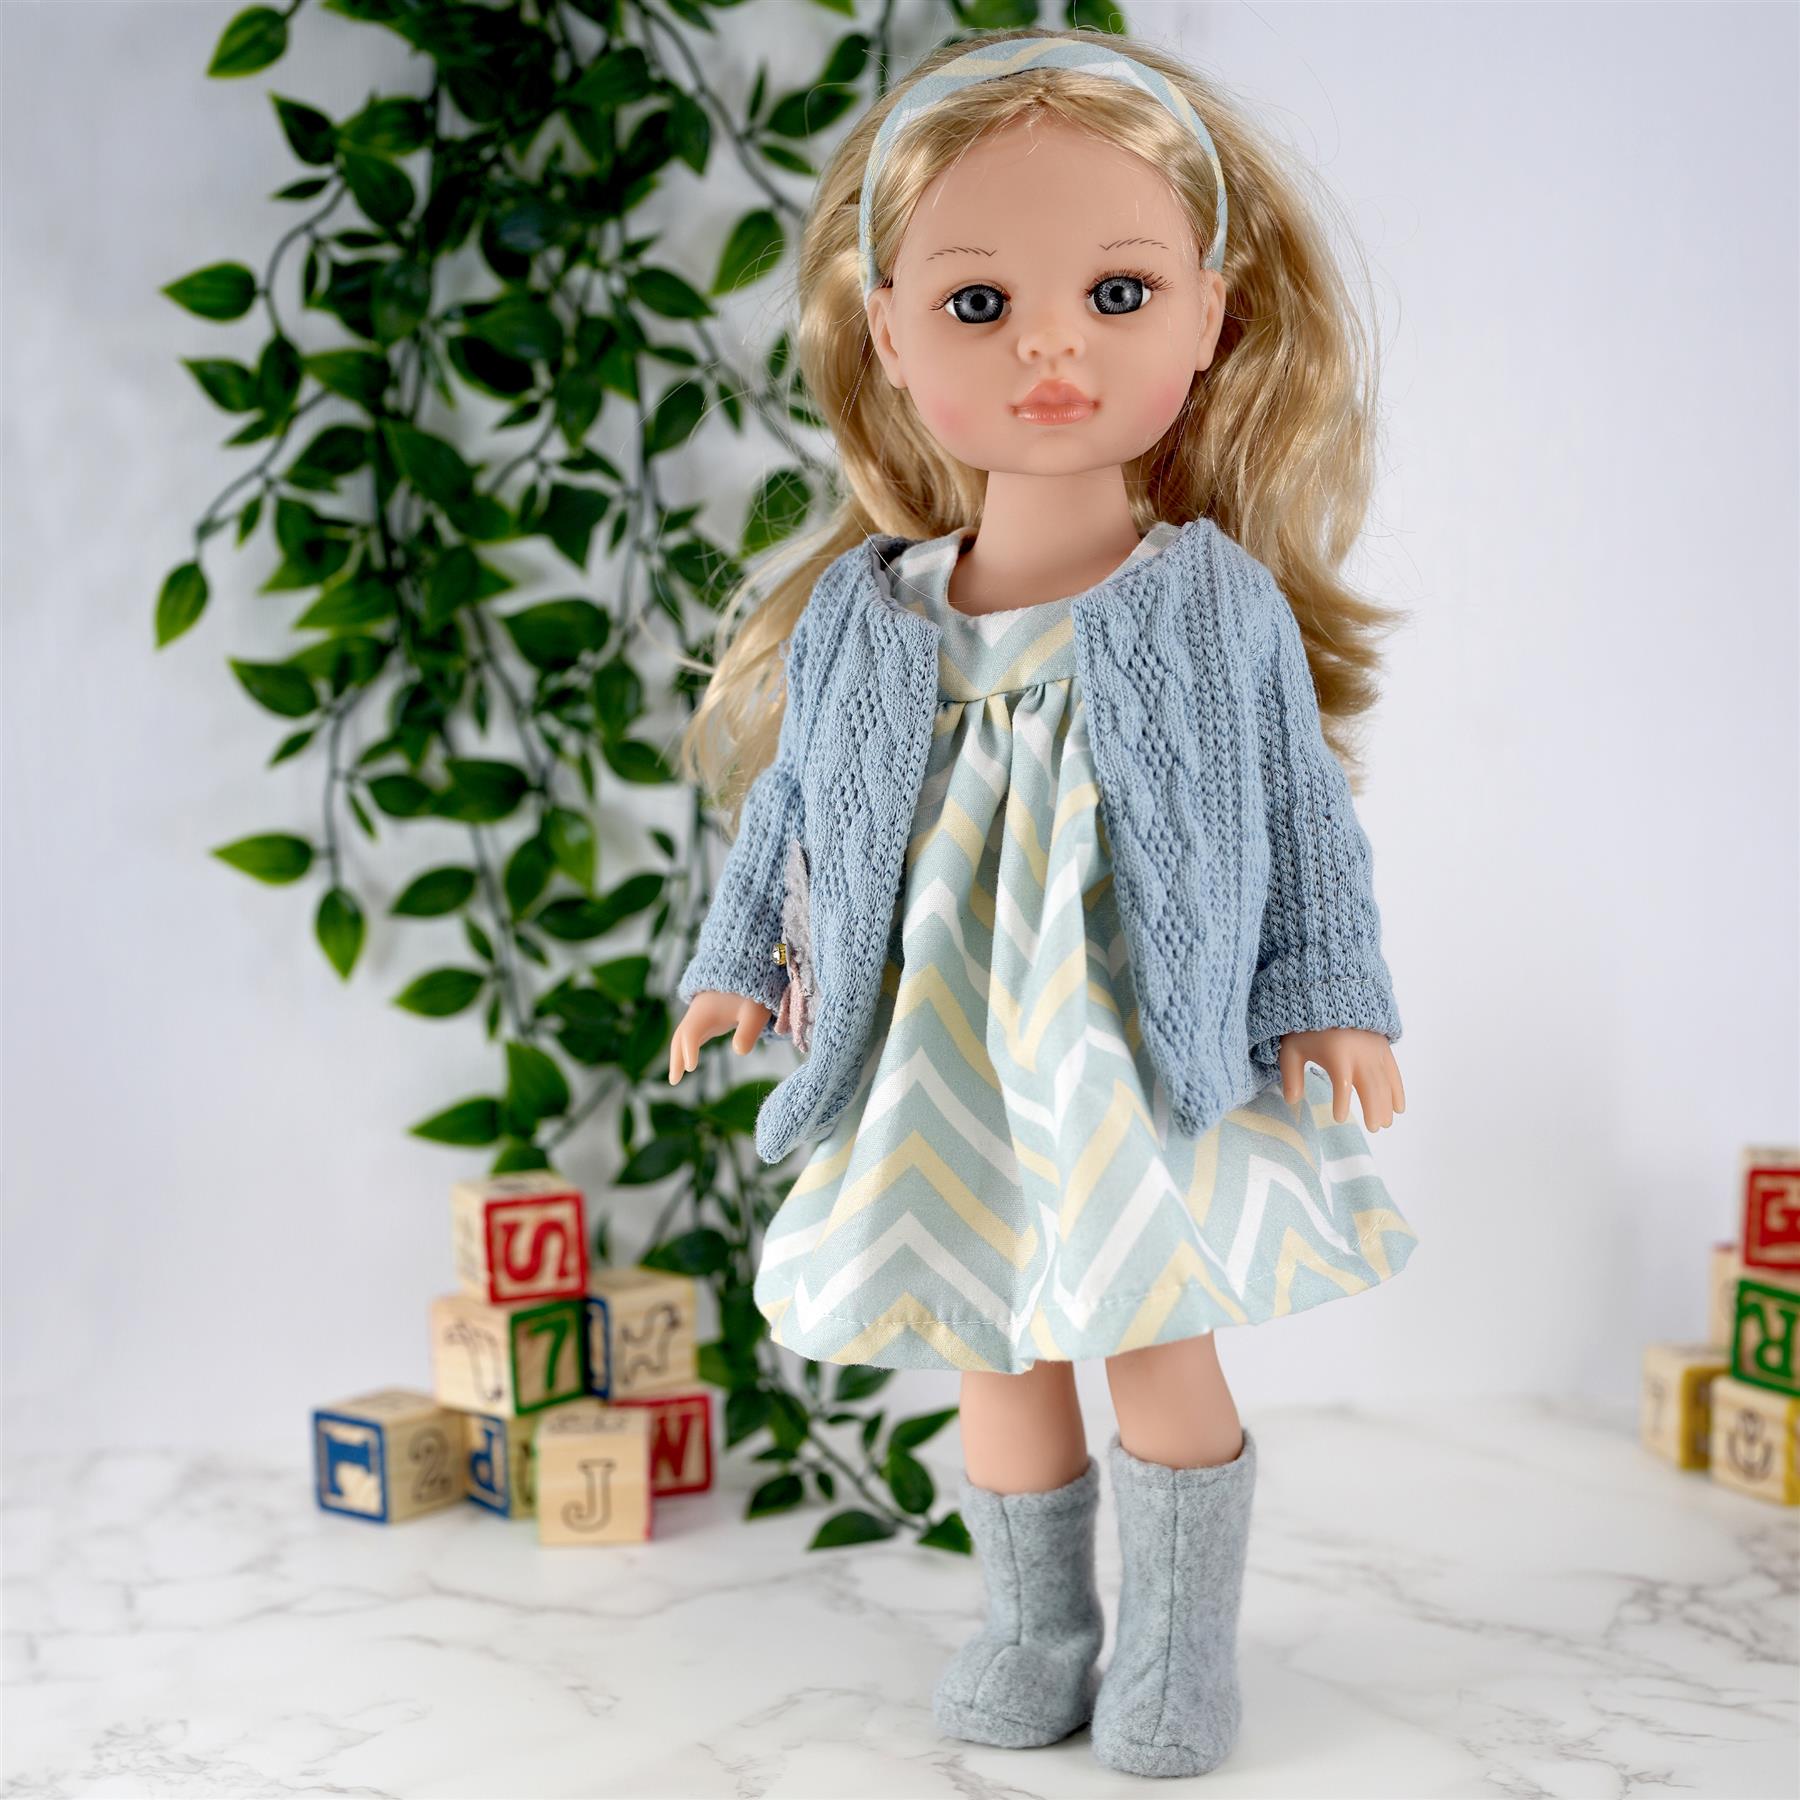 BiBi Fashion Doll "Olivia" (38 cm / 15") by BiBi Doll - The Magic Toy Shop